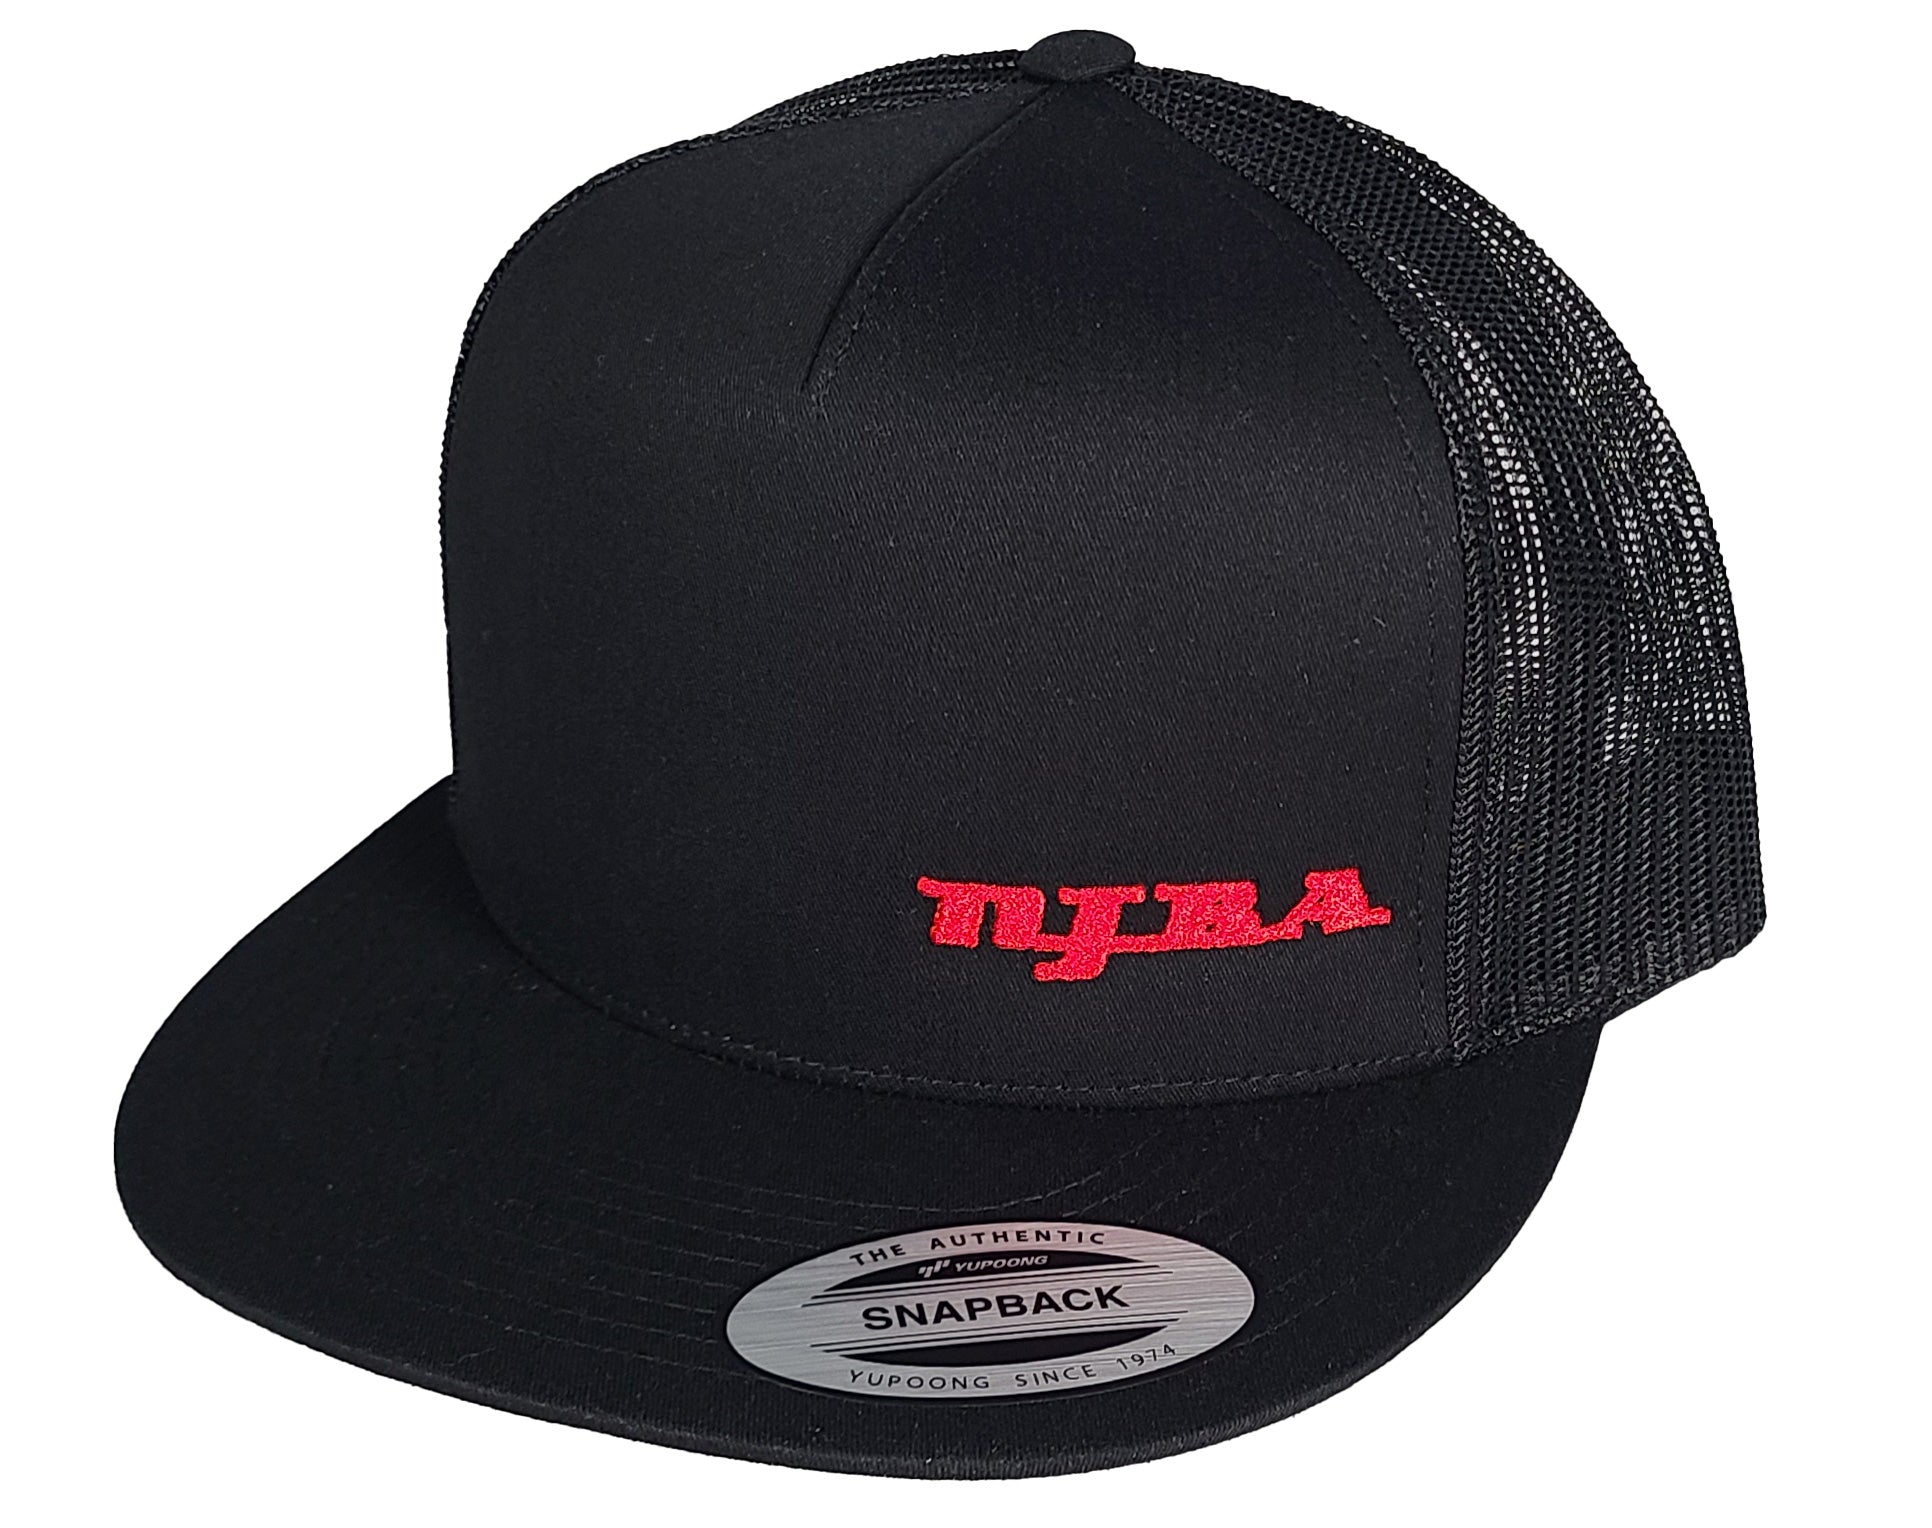 NJBA Black Mesh Snapback Trucker Hat - Red Stitching